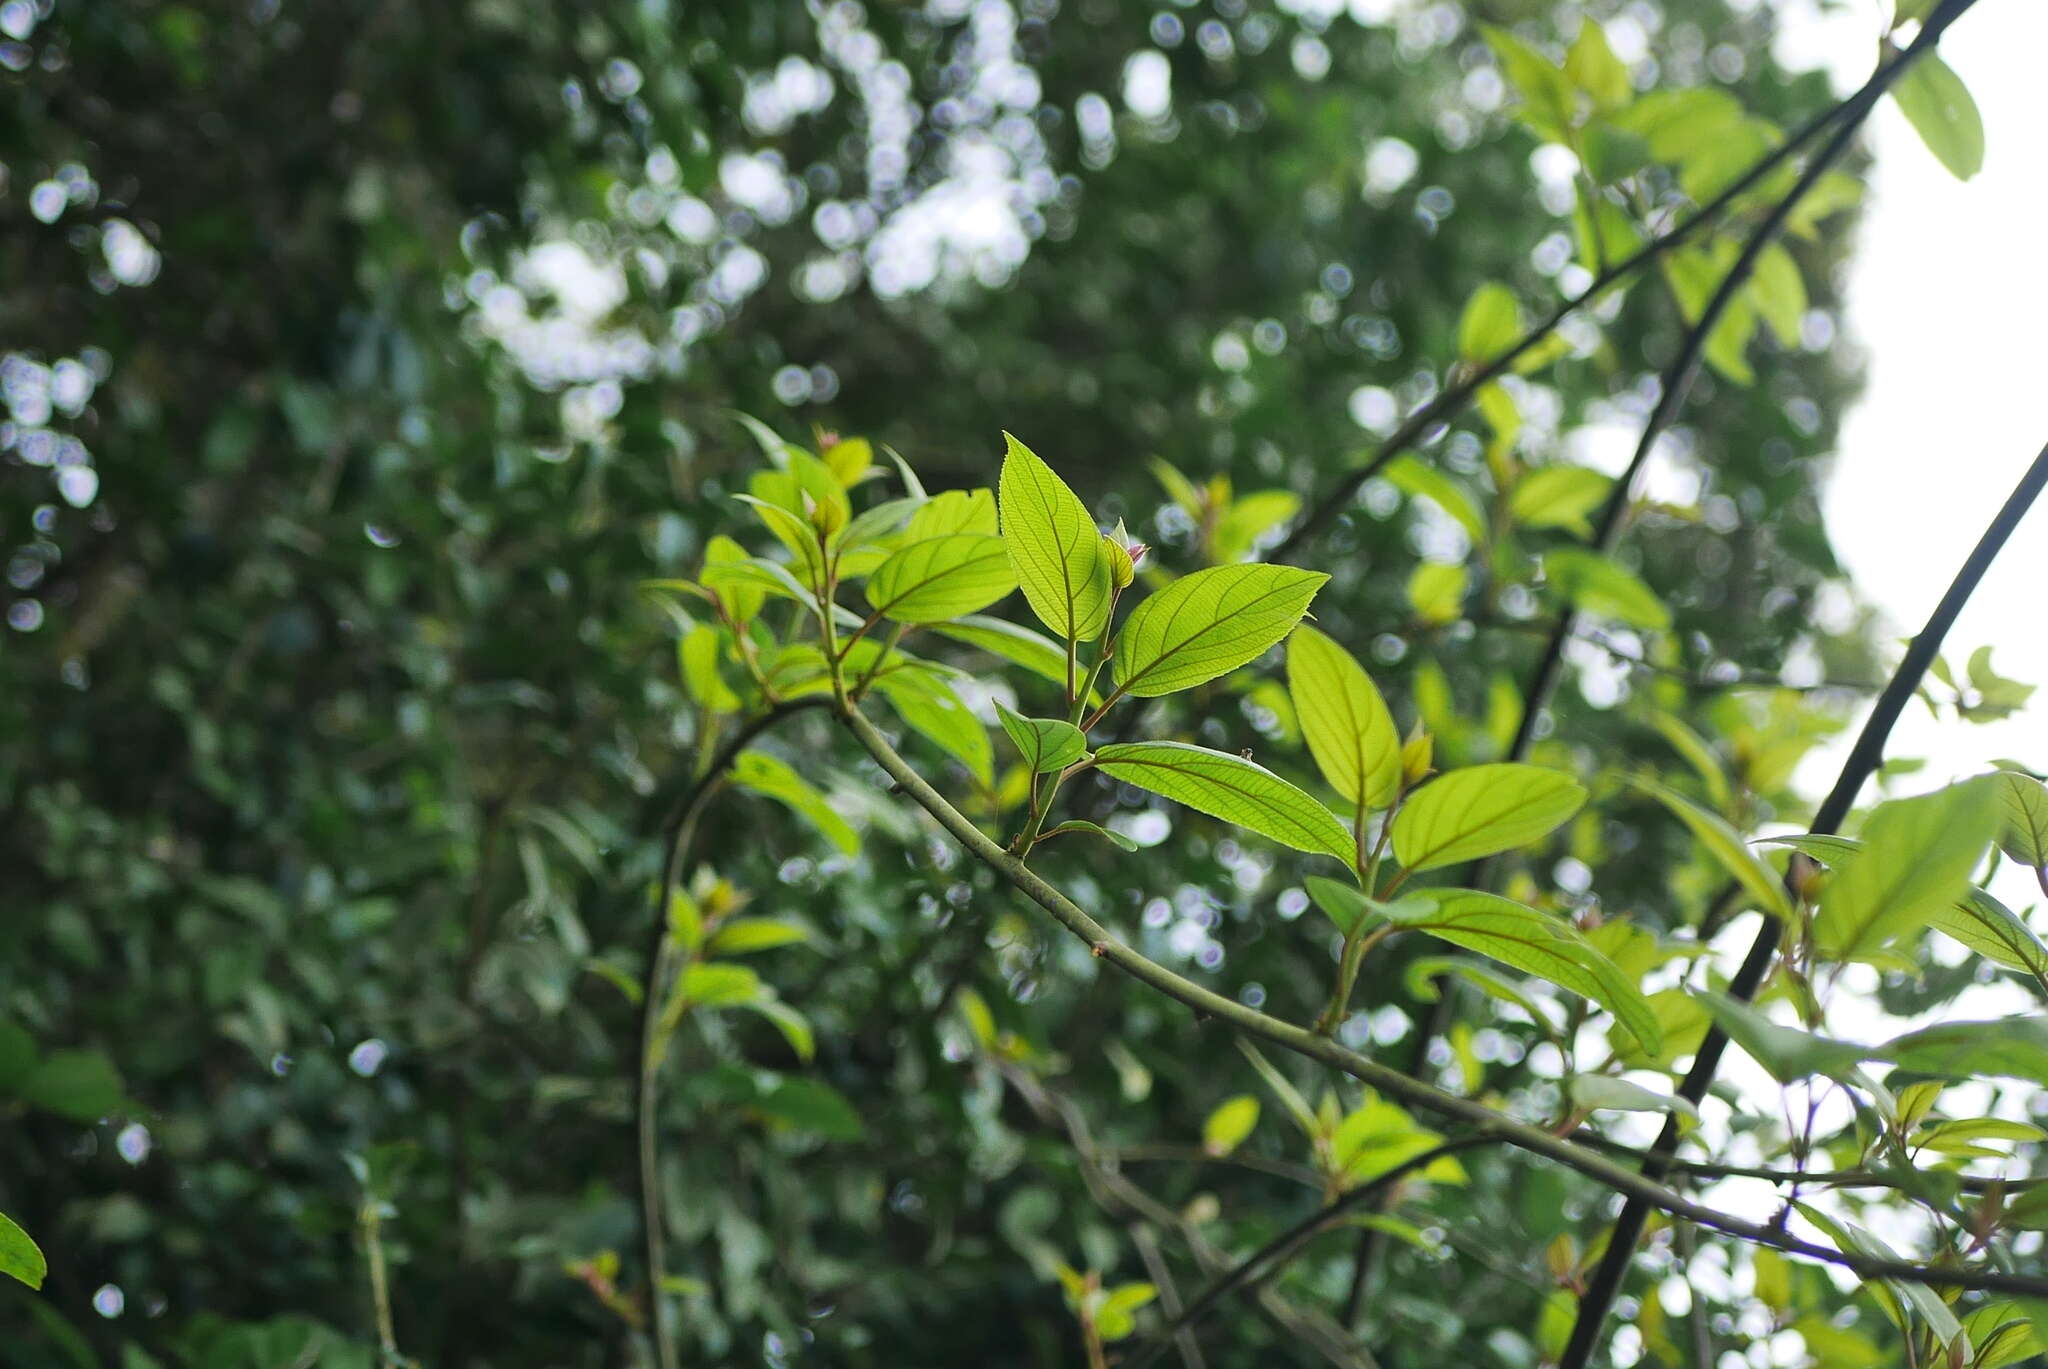 Image of Actinidia latifolia (Gardner & Champ.) Merr.